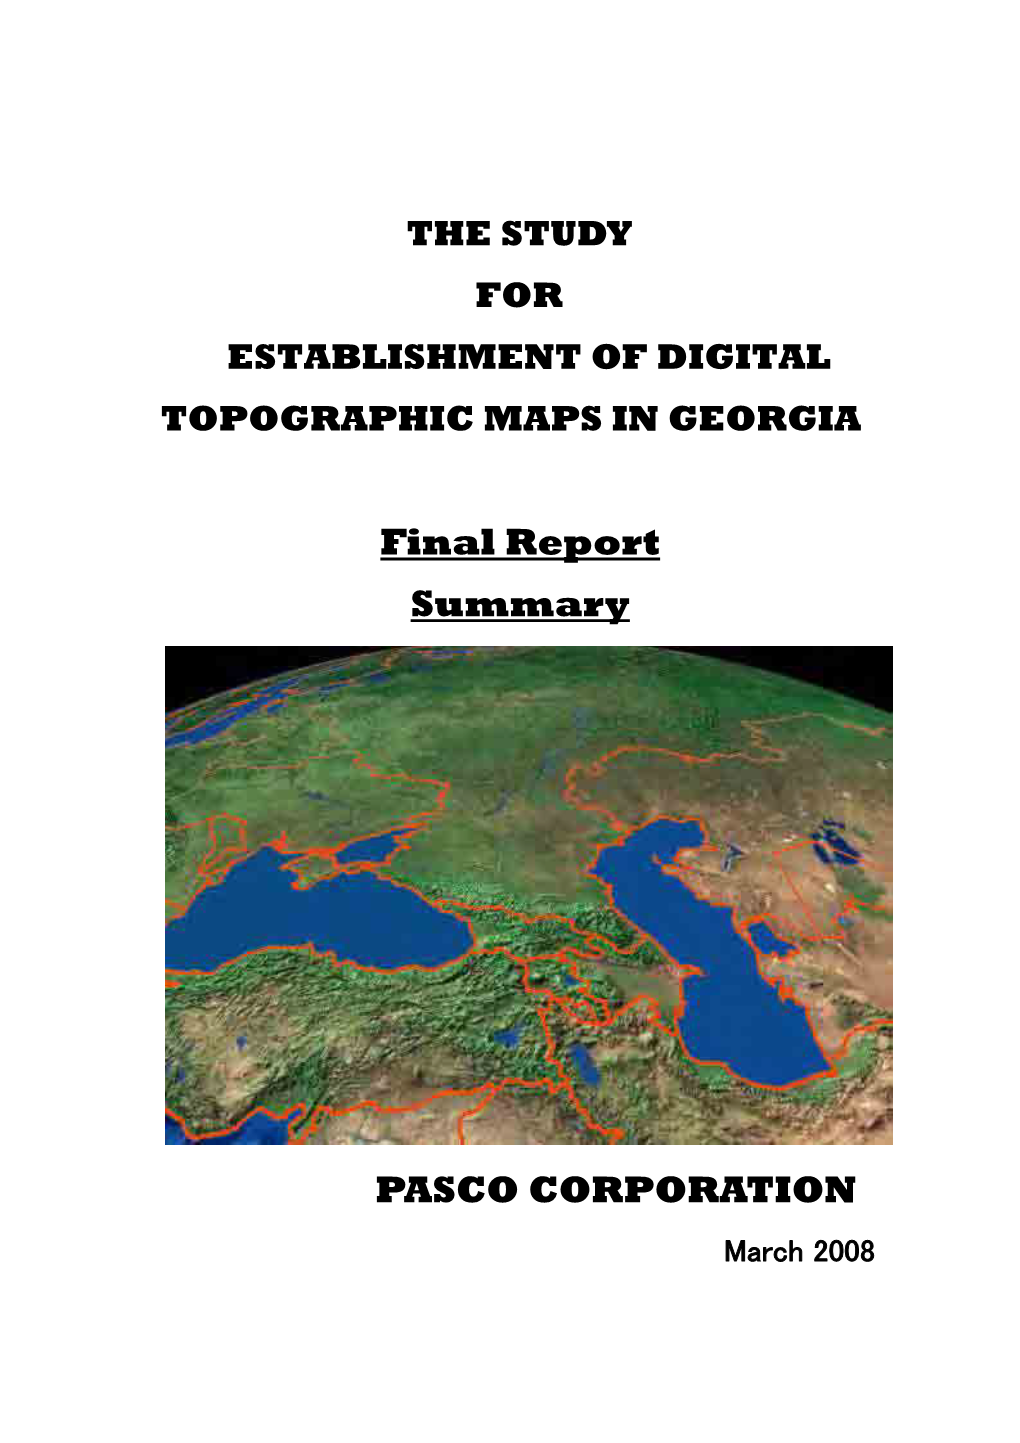 The Study for Establishment of Digital Topographic Maps in Georgia